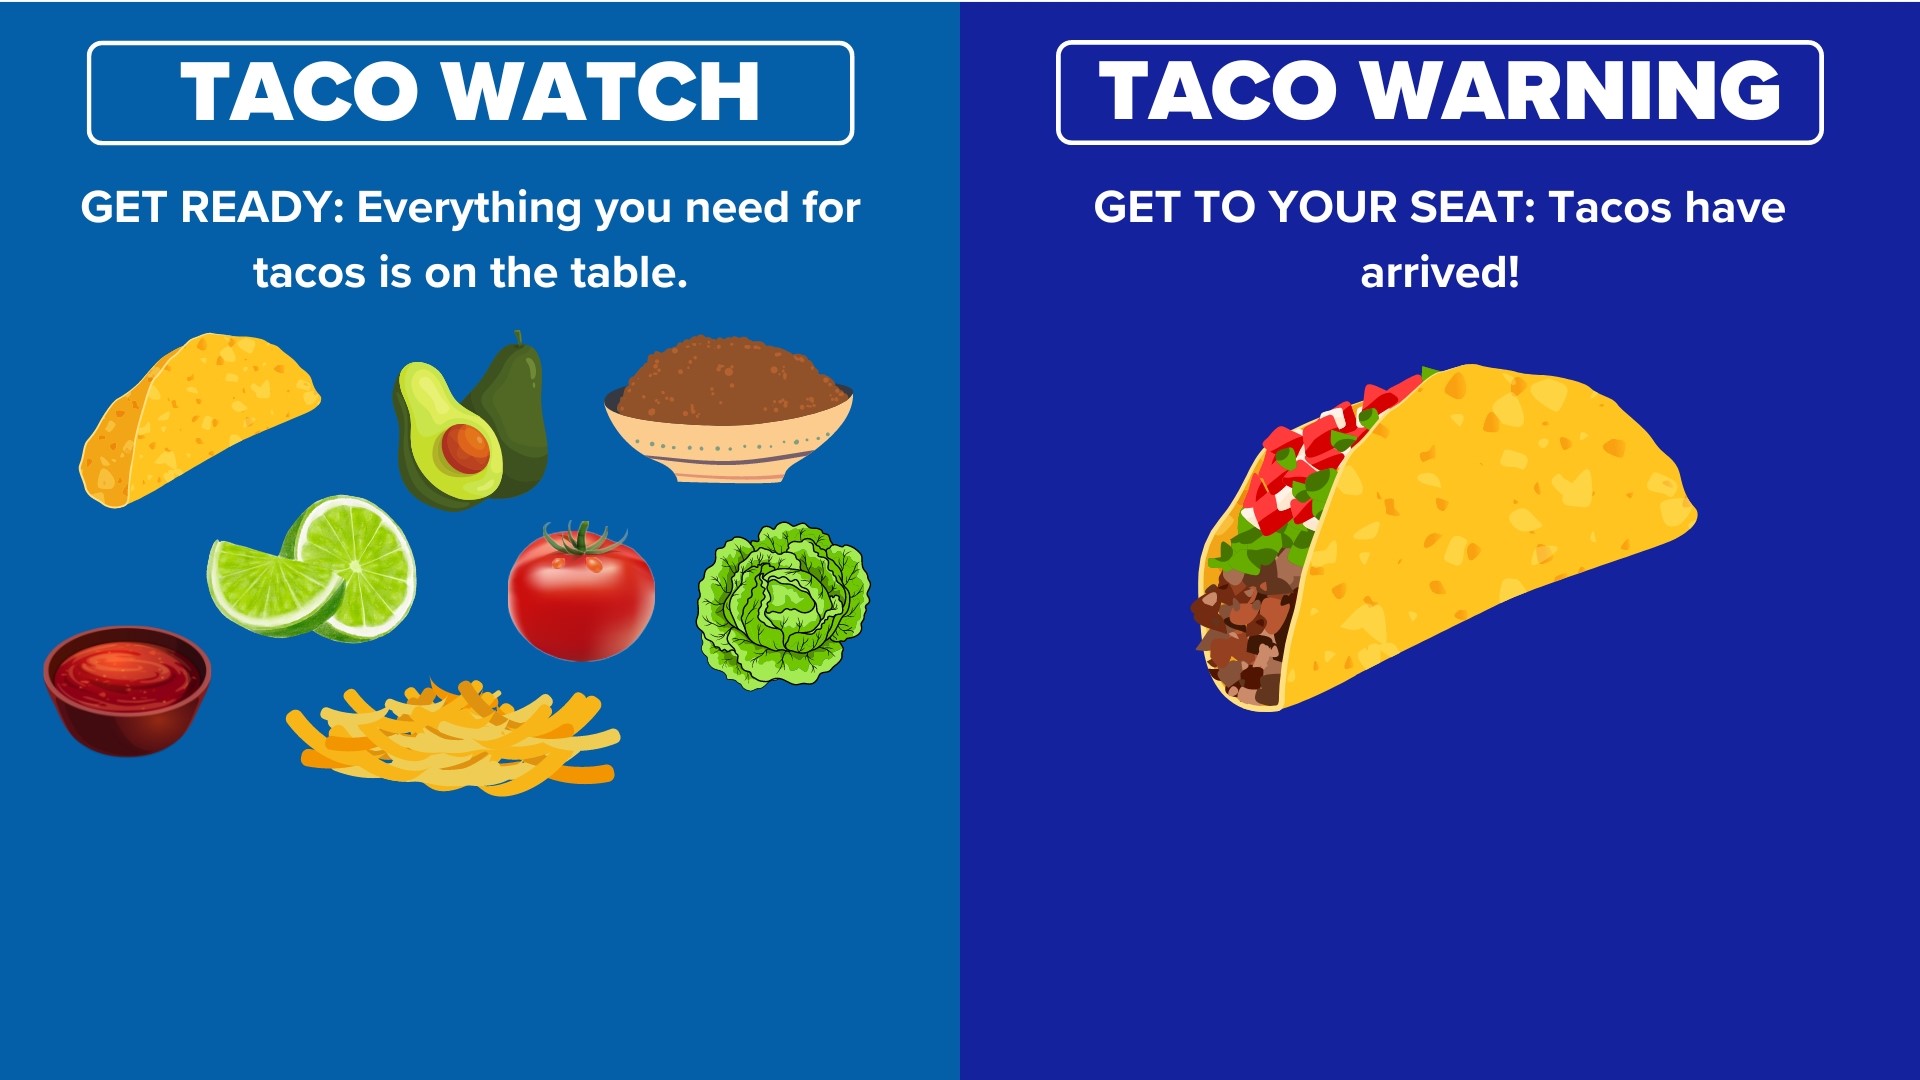 Tornado Watch vs. Tornado Warning Using tacos to explain